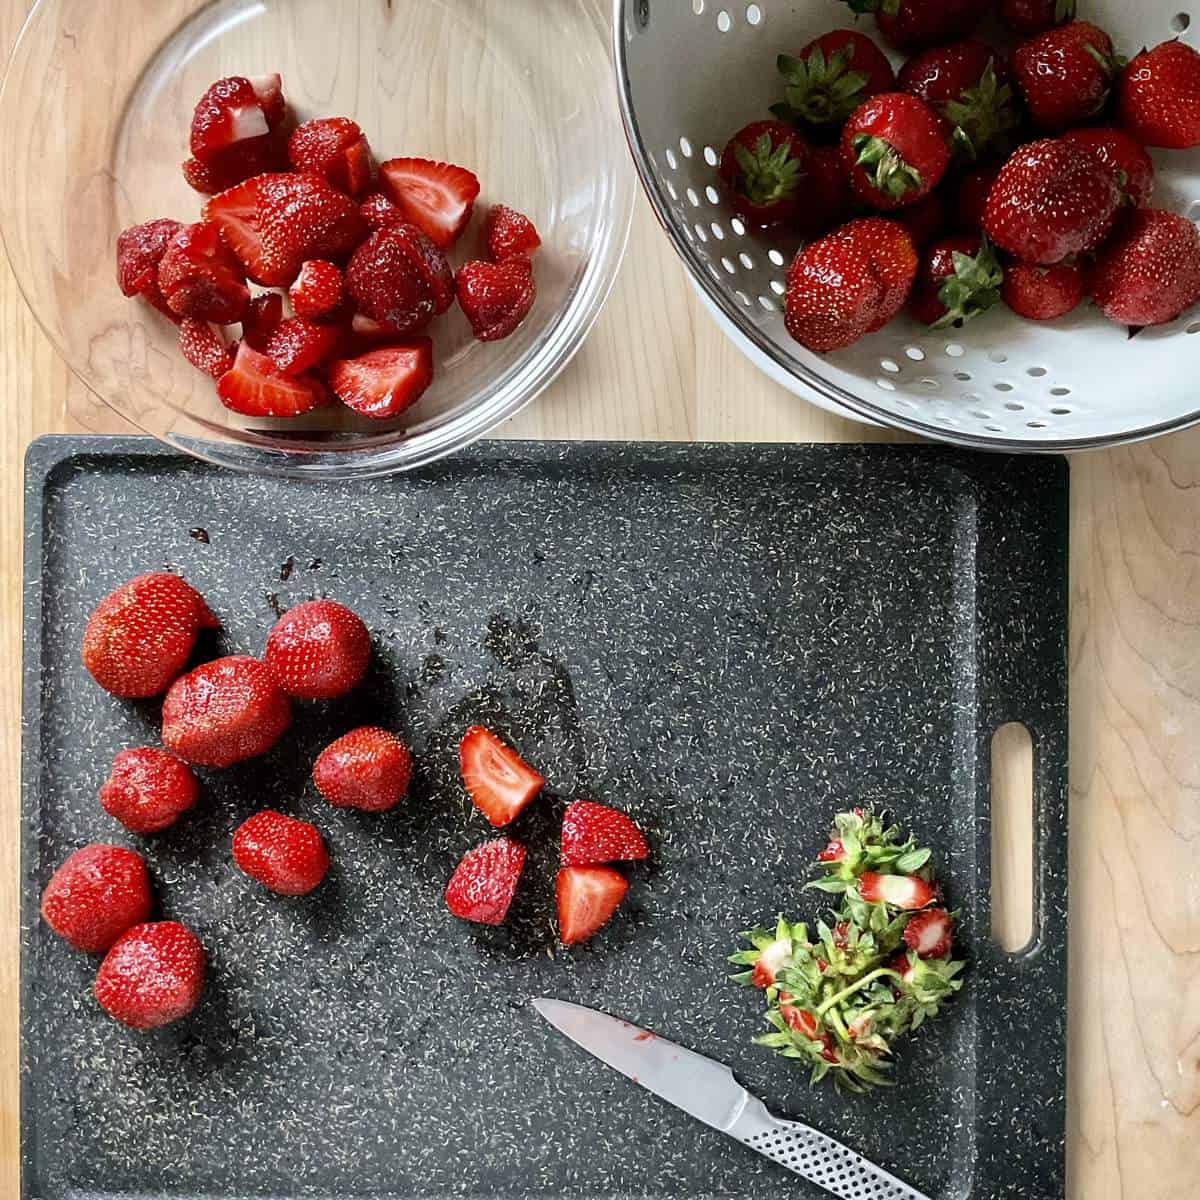 Strawberries on a cutting board.